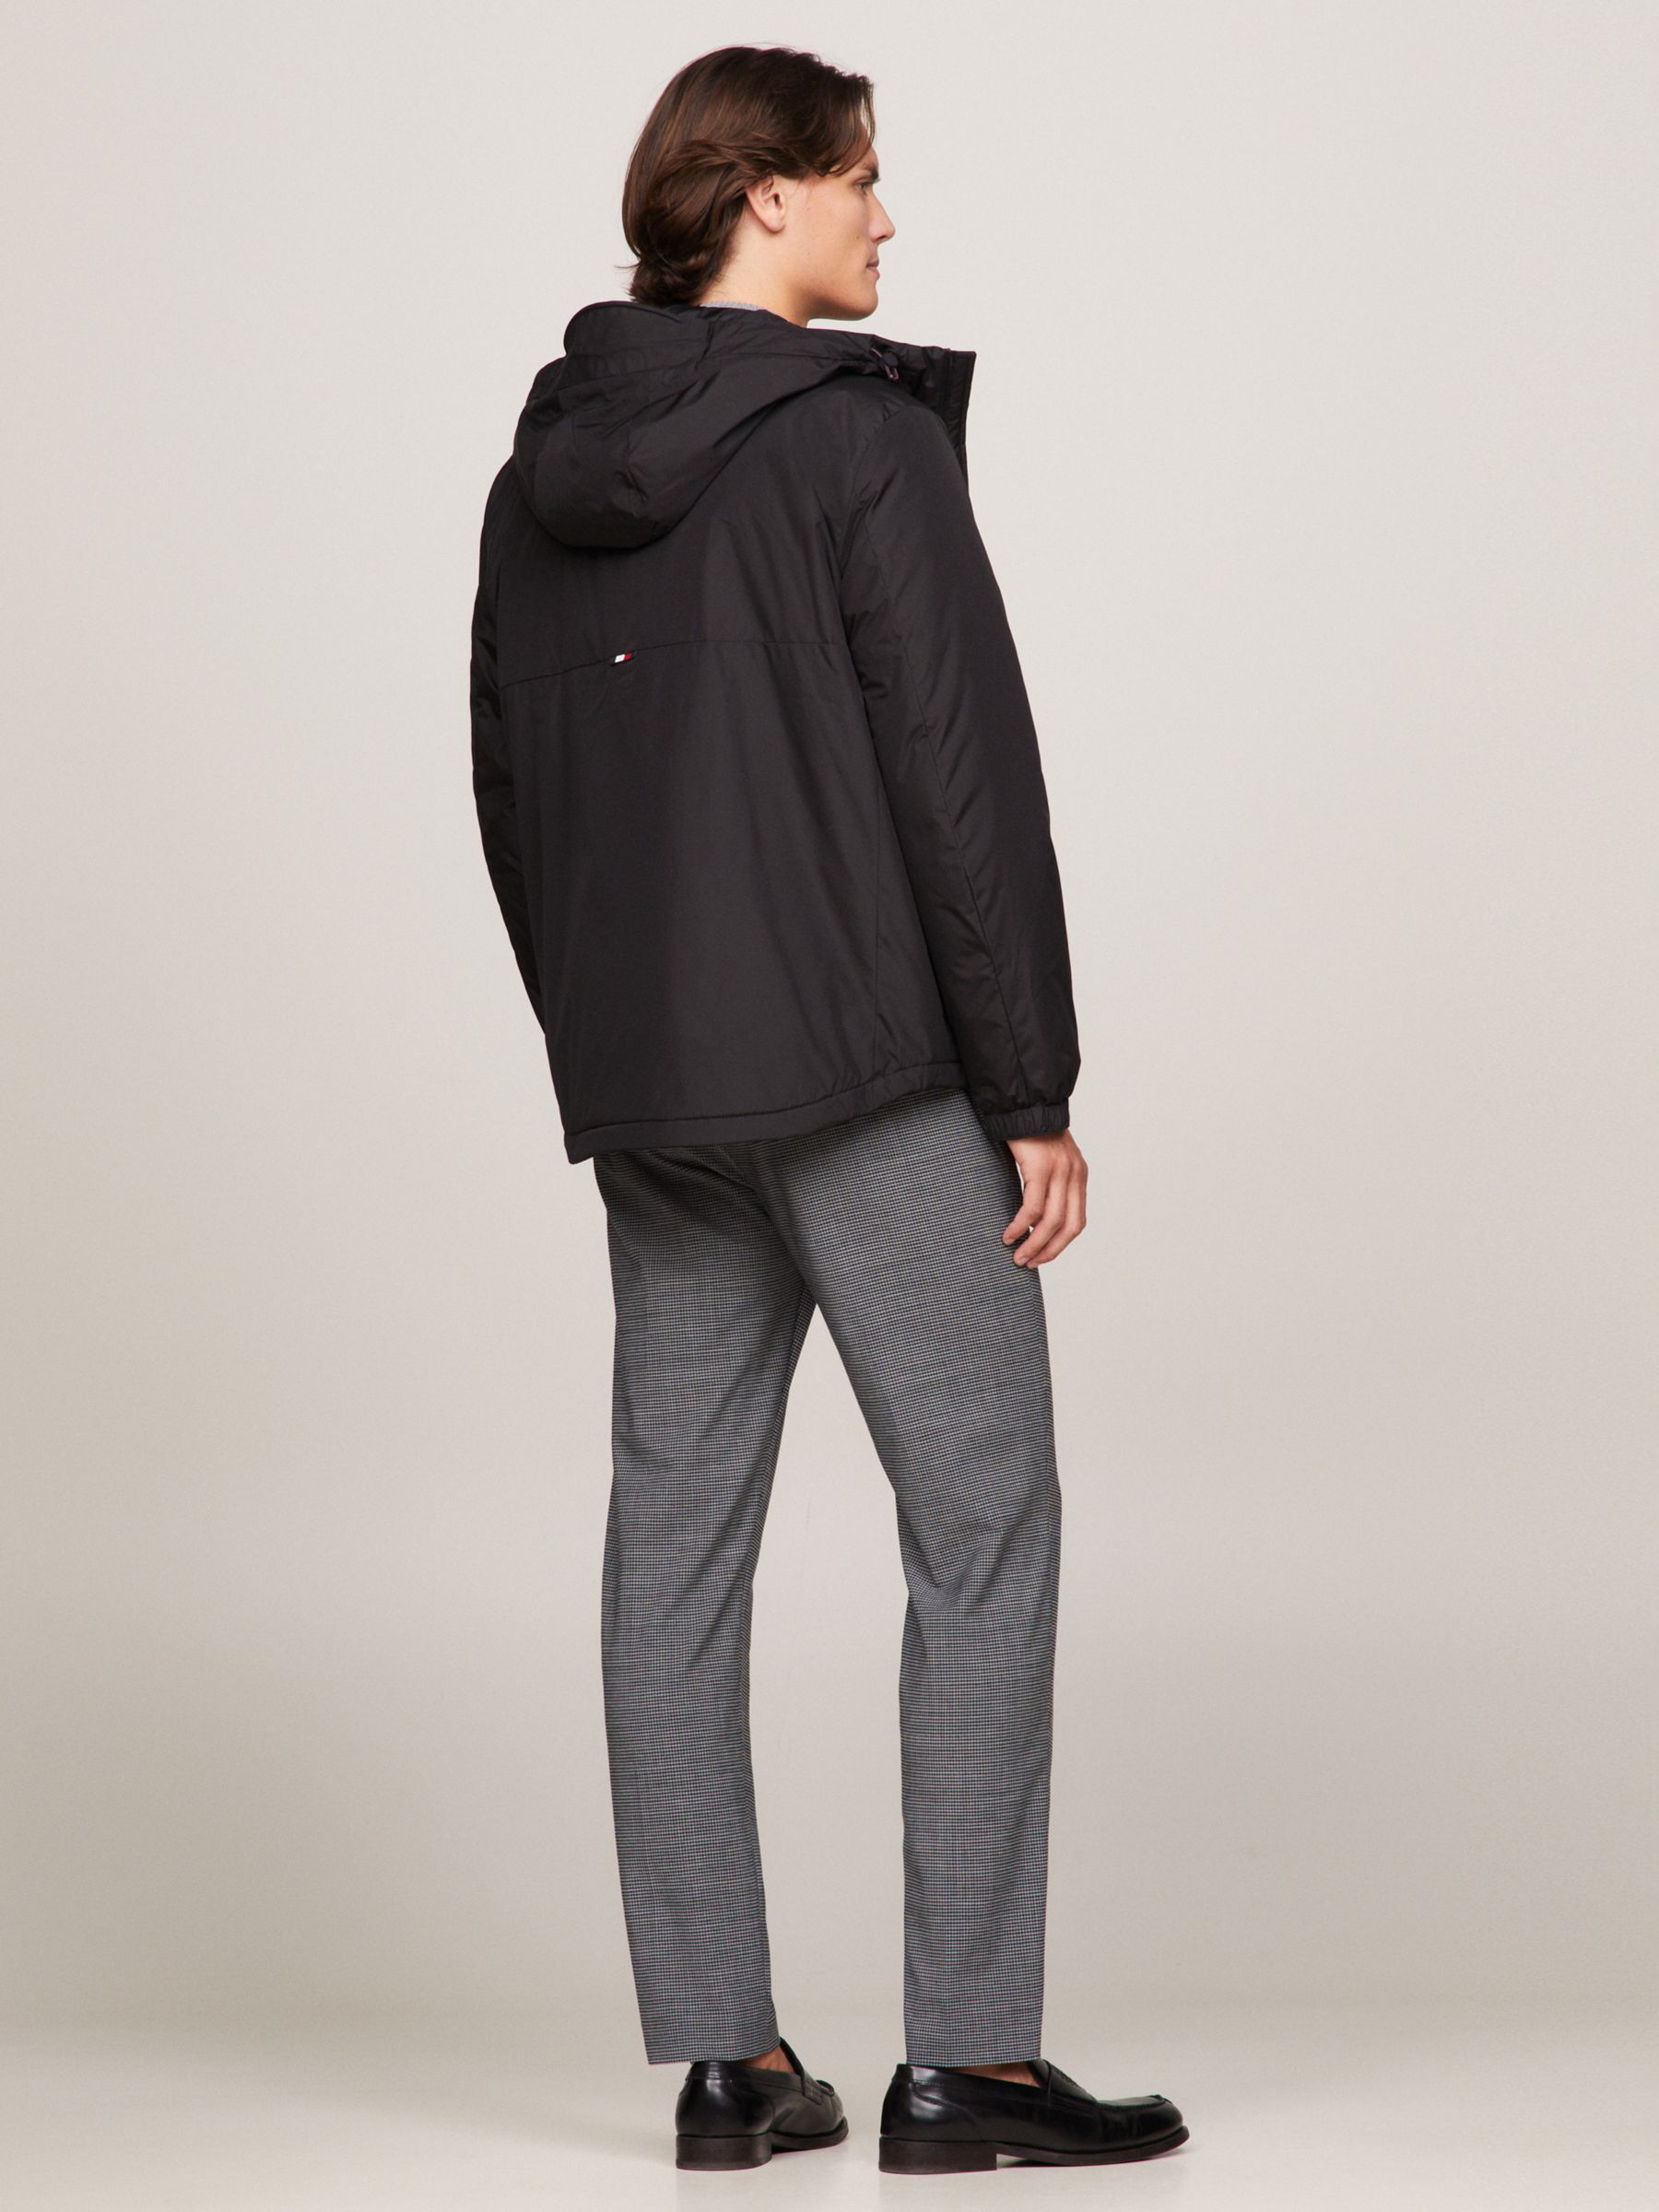 Tommy Hilfiger Portland Hooded Jacket, Black, XL